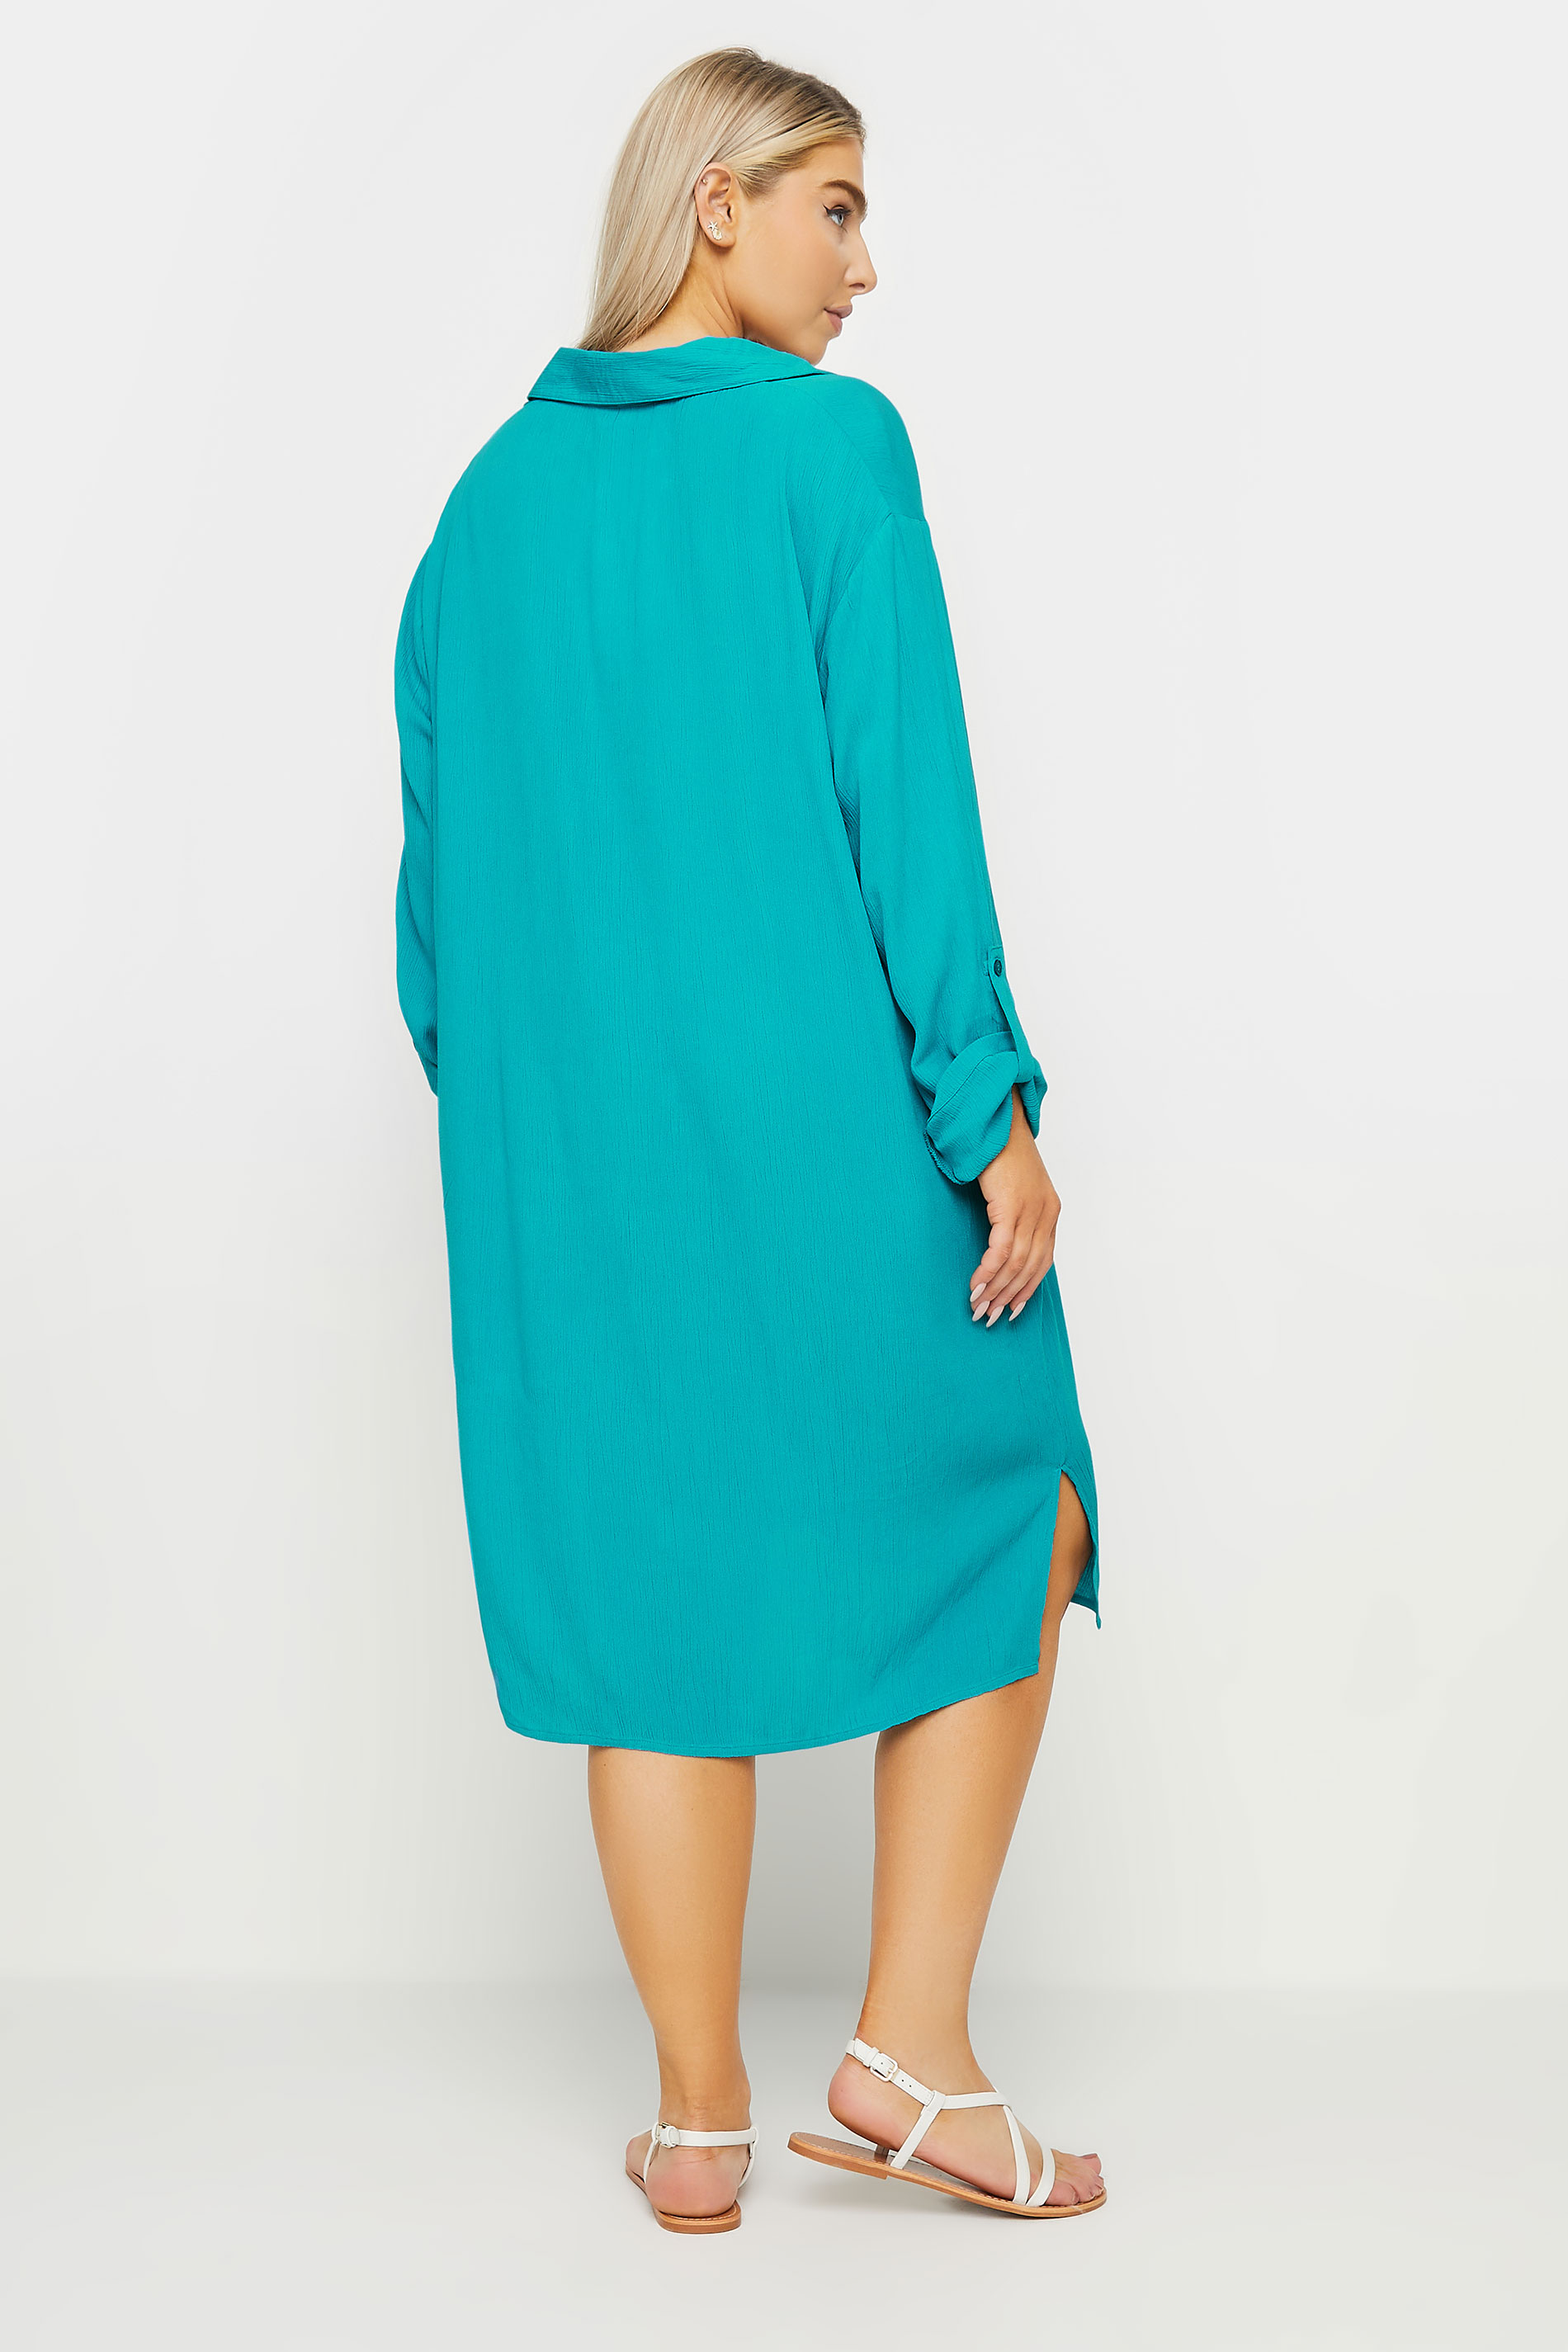 M&Co Turquoise Blue Long Sleeve Crinkle Shirt Dress | M&Co 3